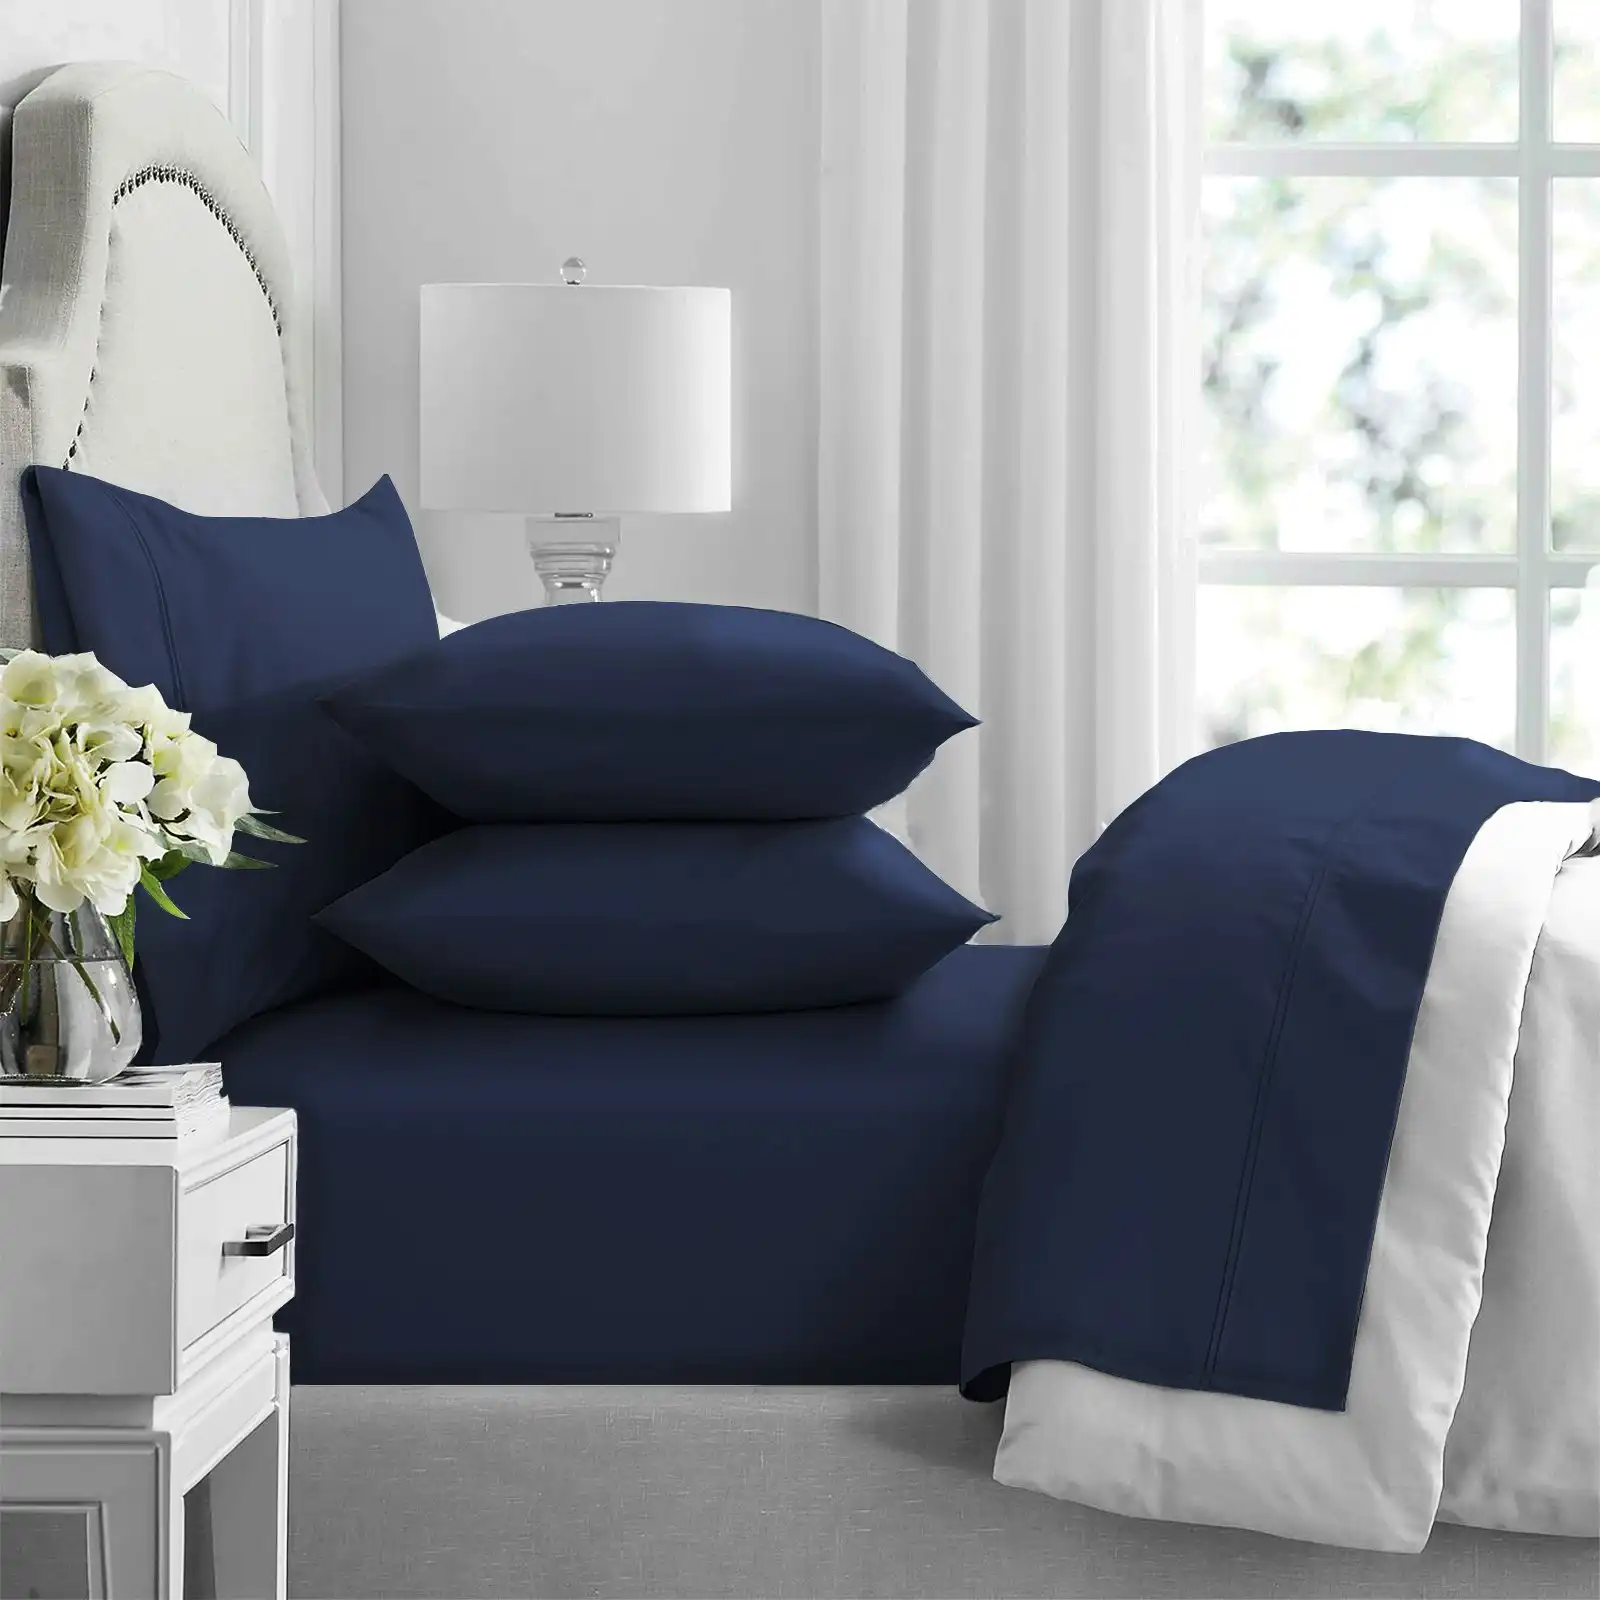 Renee Taylor Queen Bed Sheet Set Premium 1000TC  Egyptian Cotton Bedding Indigo